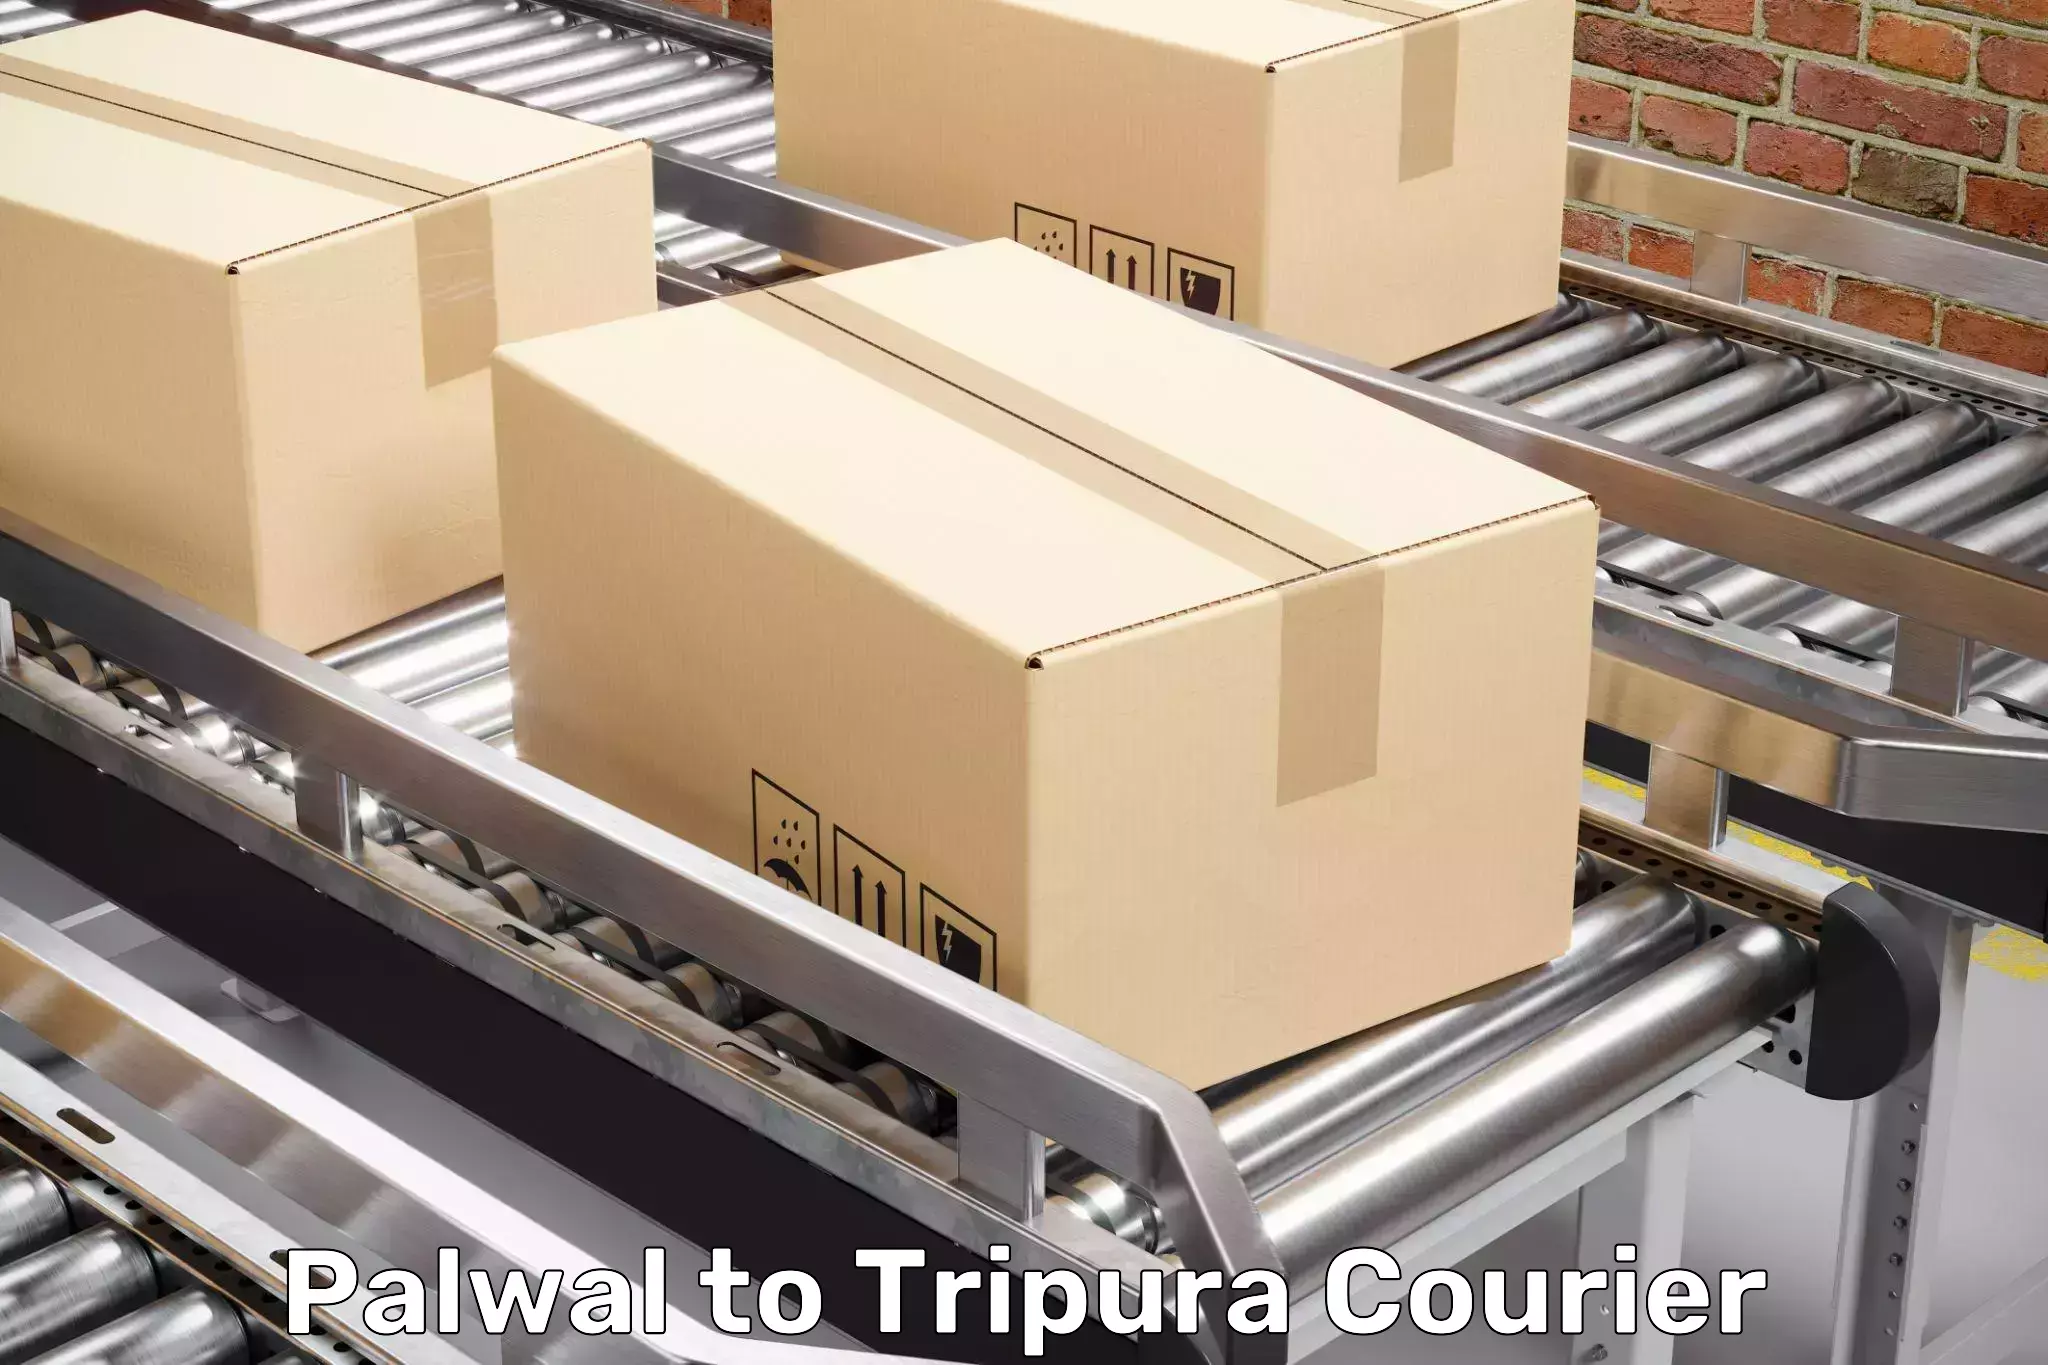 Seamless moving process Palwal to Udaipur Tripura